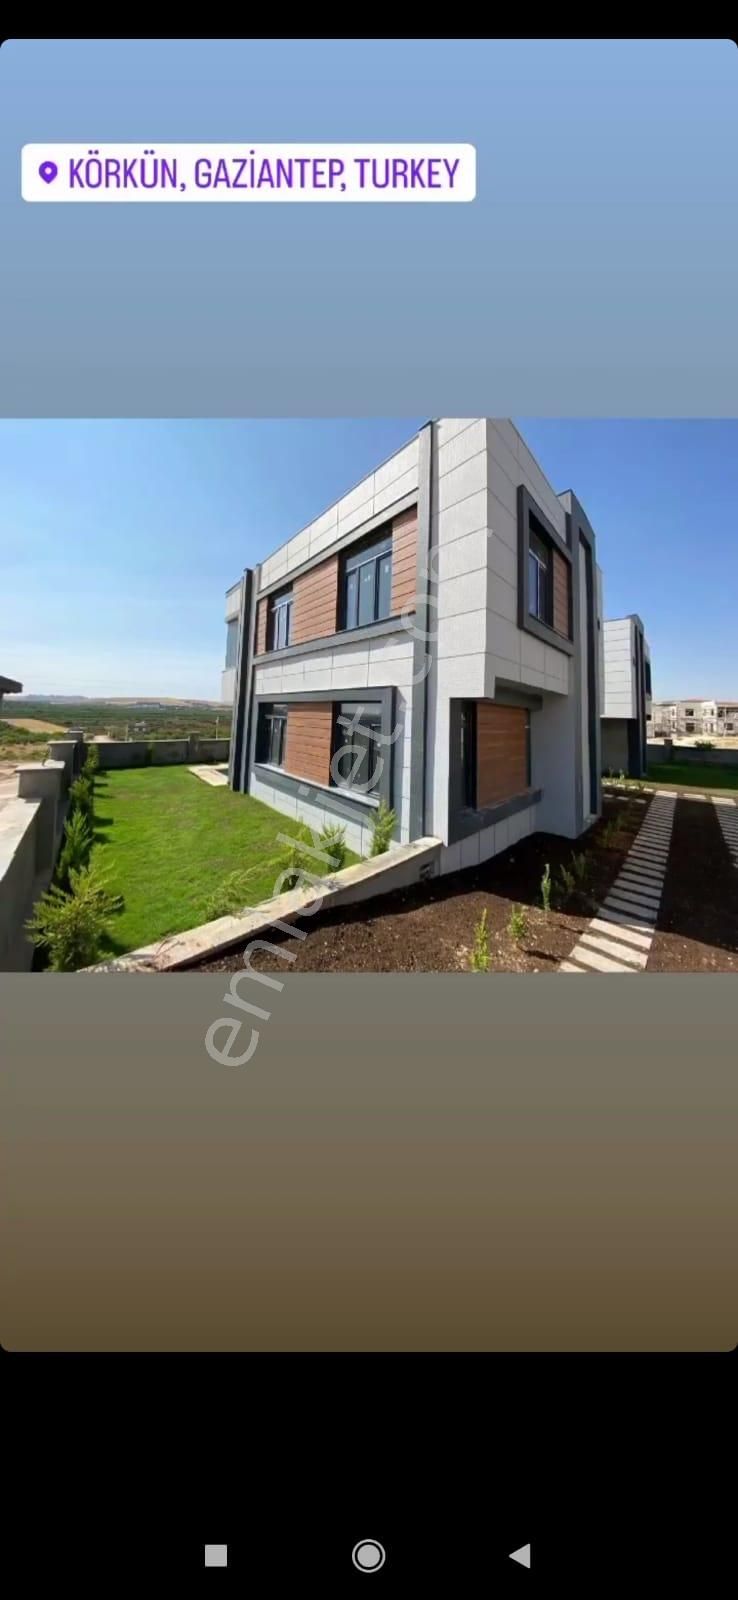 Oğuzeli Körkün Satılık Villa  ERTAŞ GAYRİMENKUL'DEN KÖRKÜN MAH. SATILIK VİLLA